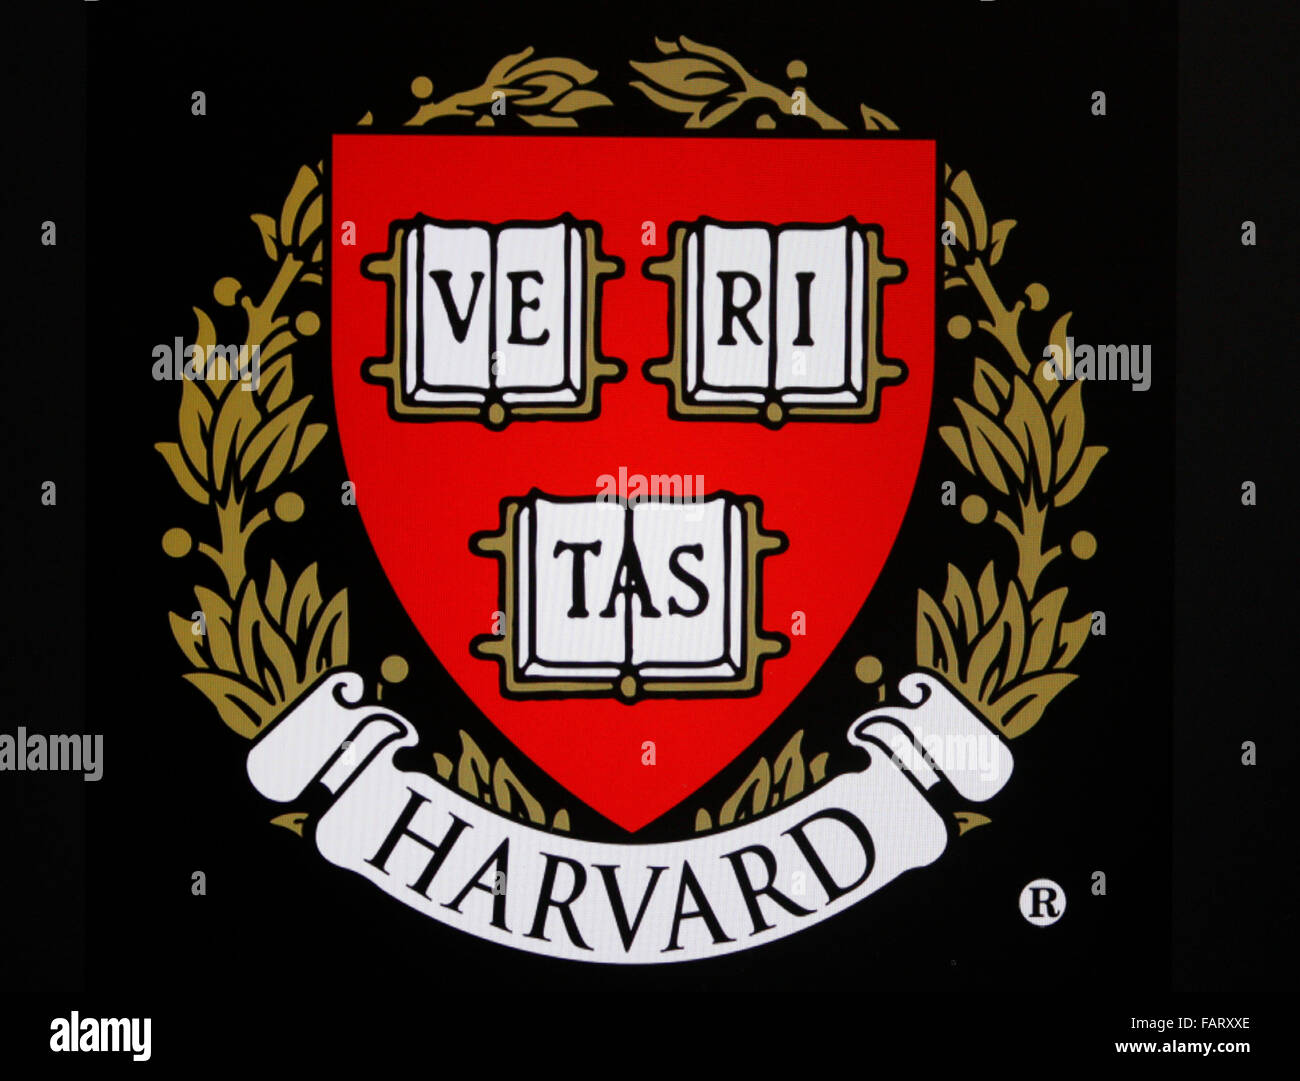 harvard medical school logo black and white